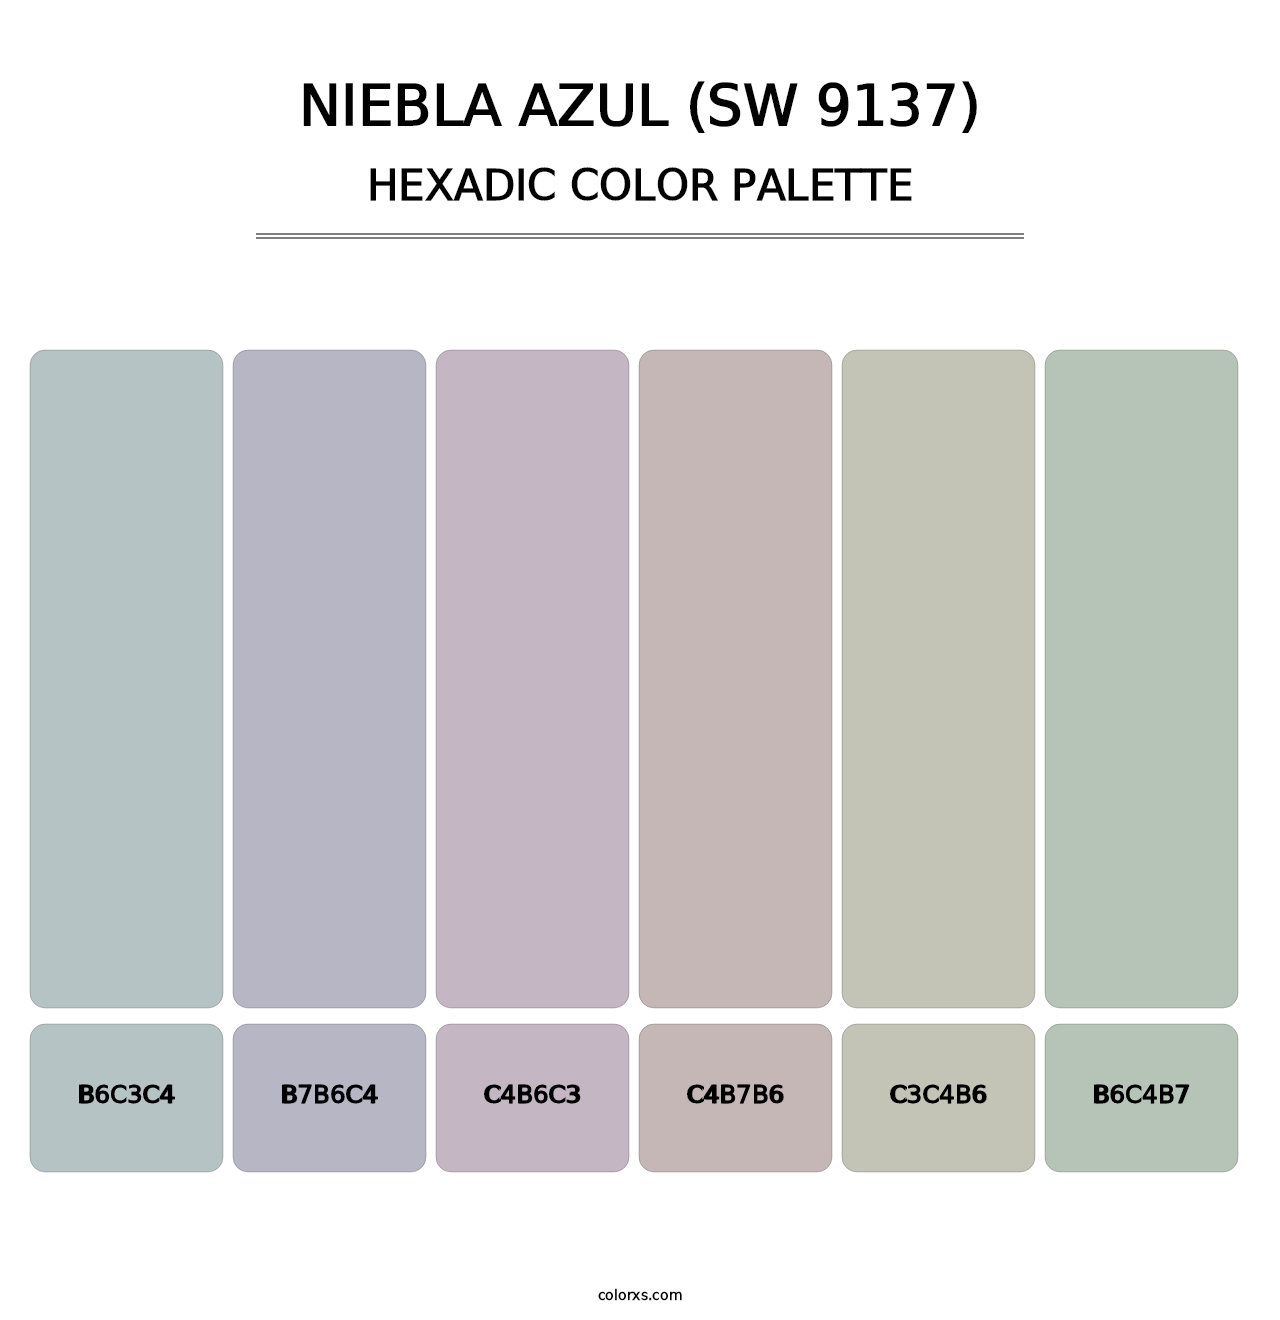 Niebla Azul (SW 9137) - Hexadic Color Palette